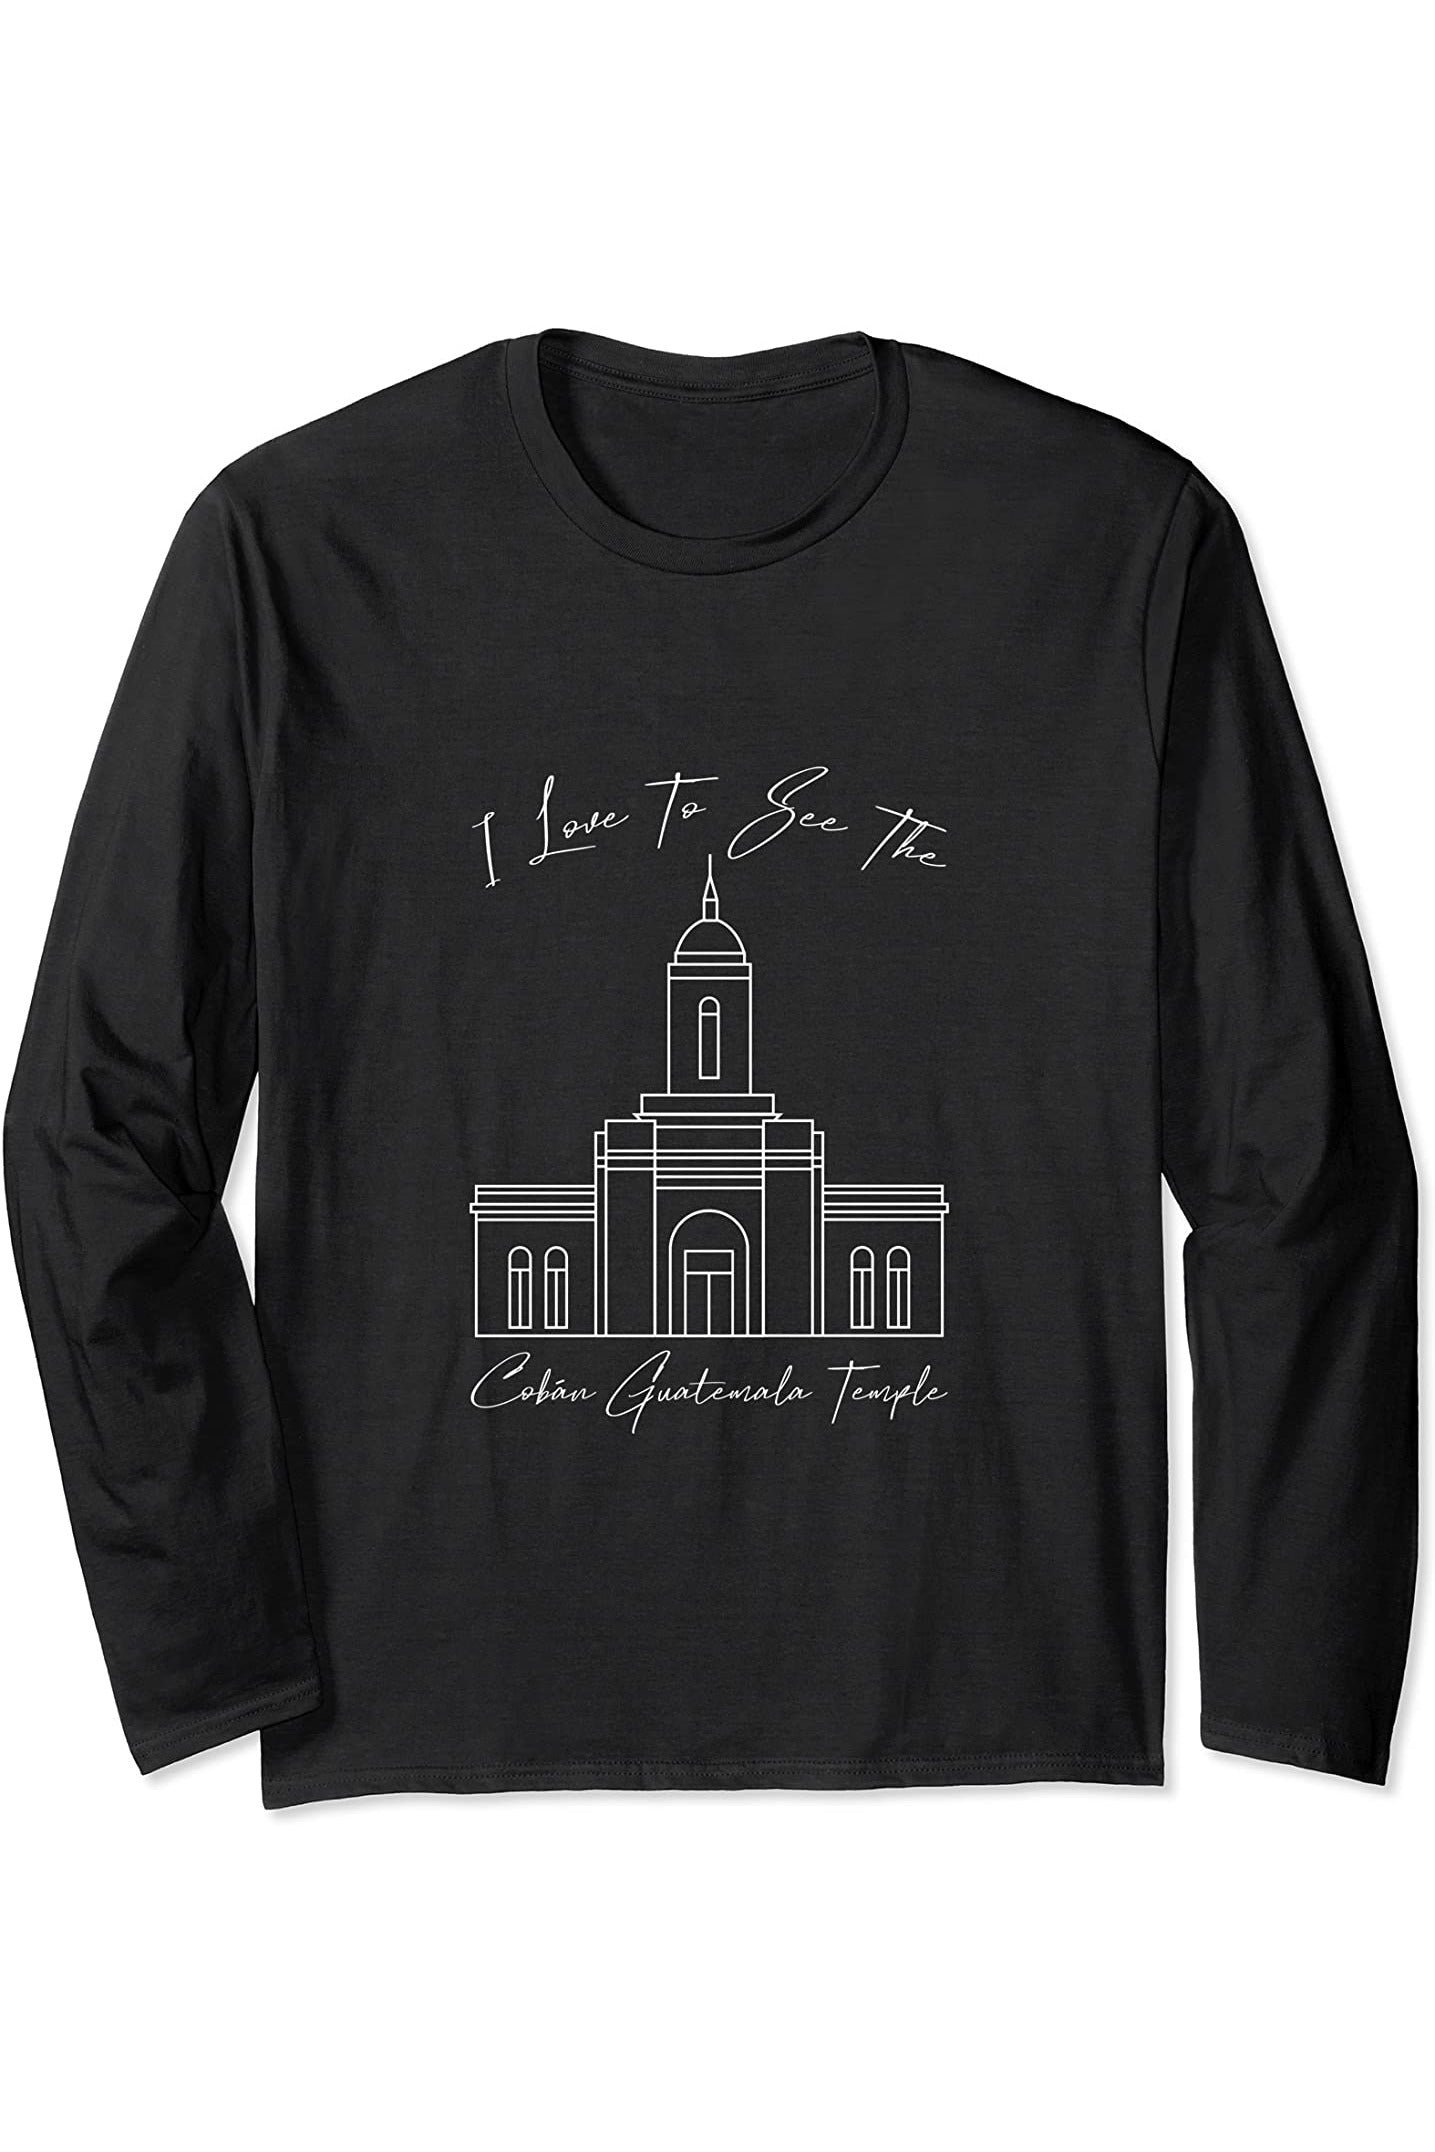 Coban Guatemala Temple Long Sleeve T-Shirt - Calligraphy Style (English) US